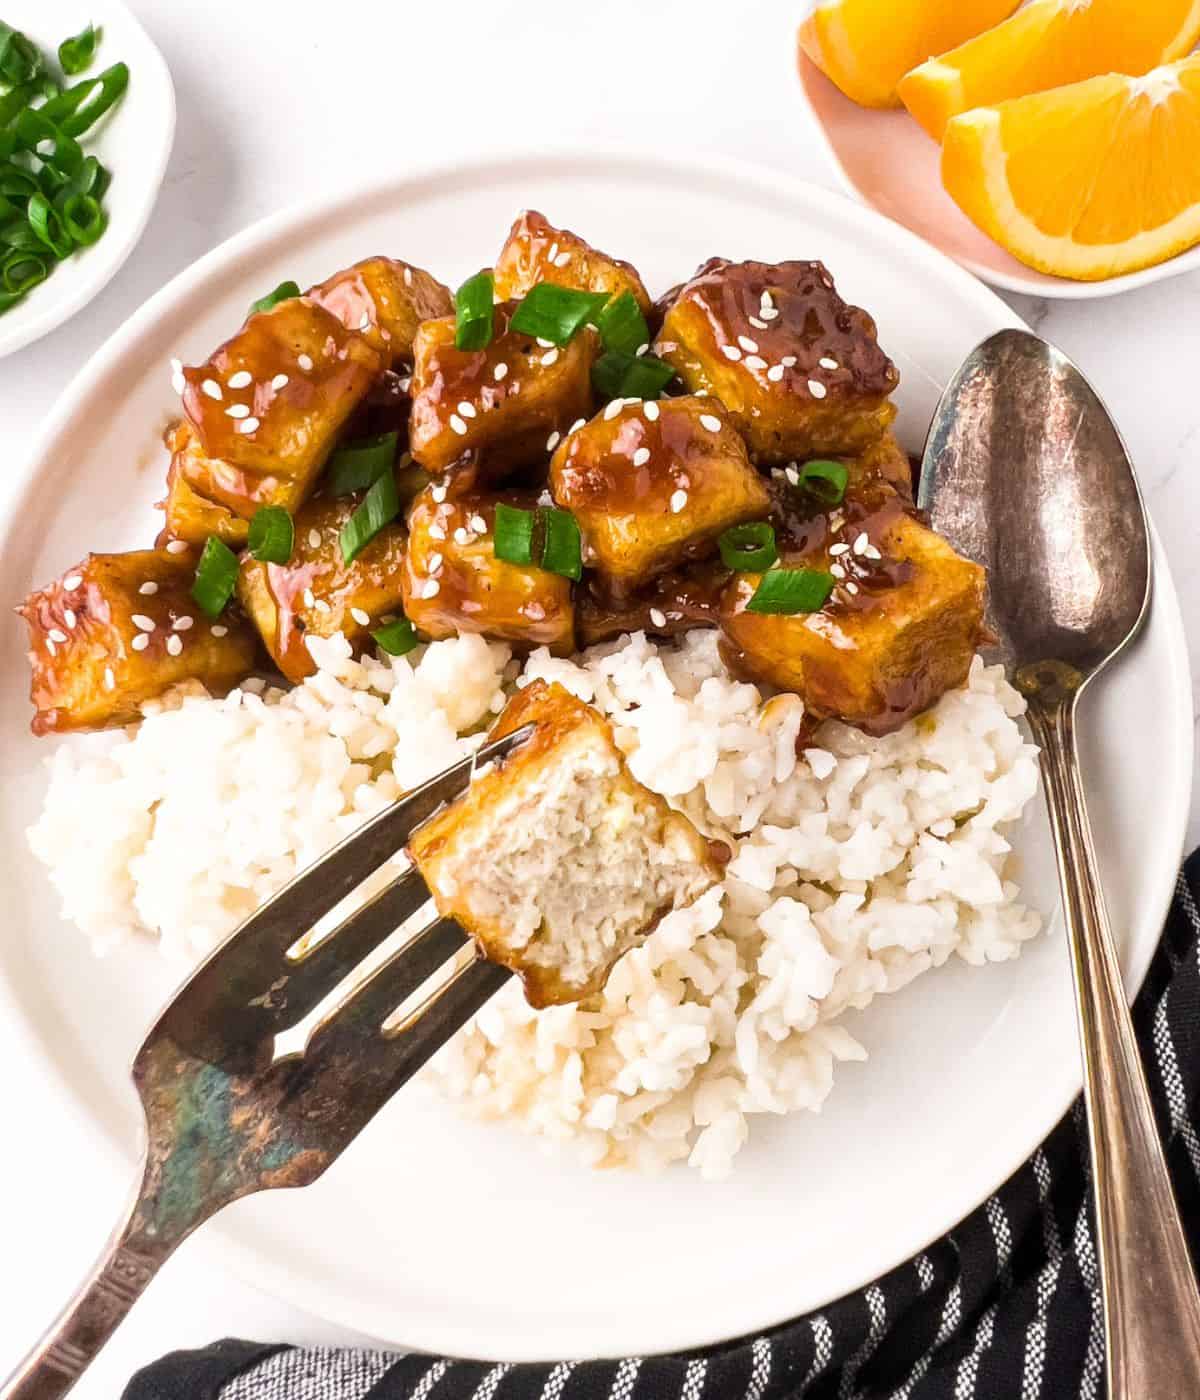 Finish dish of orange chicken tofu with a bite.